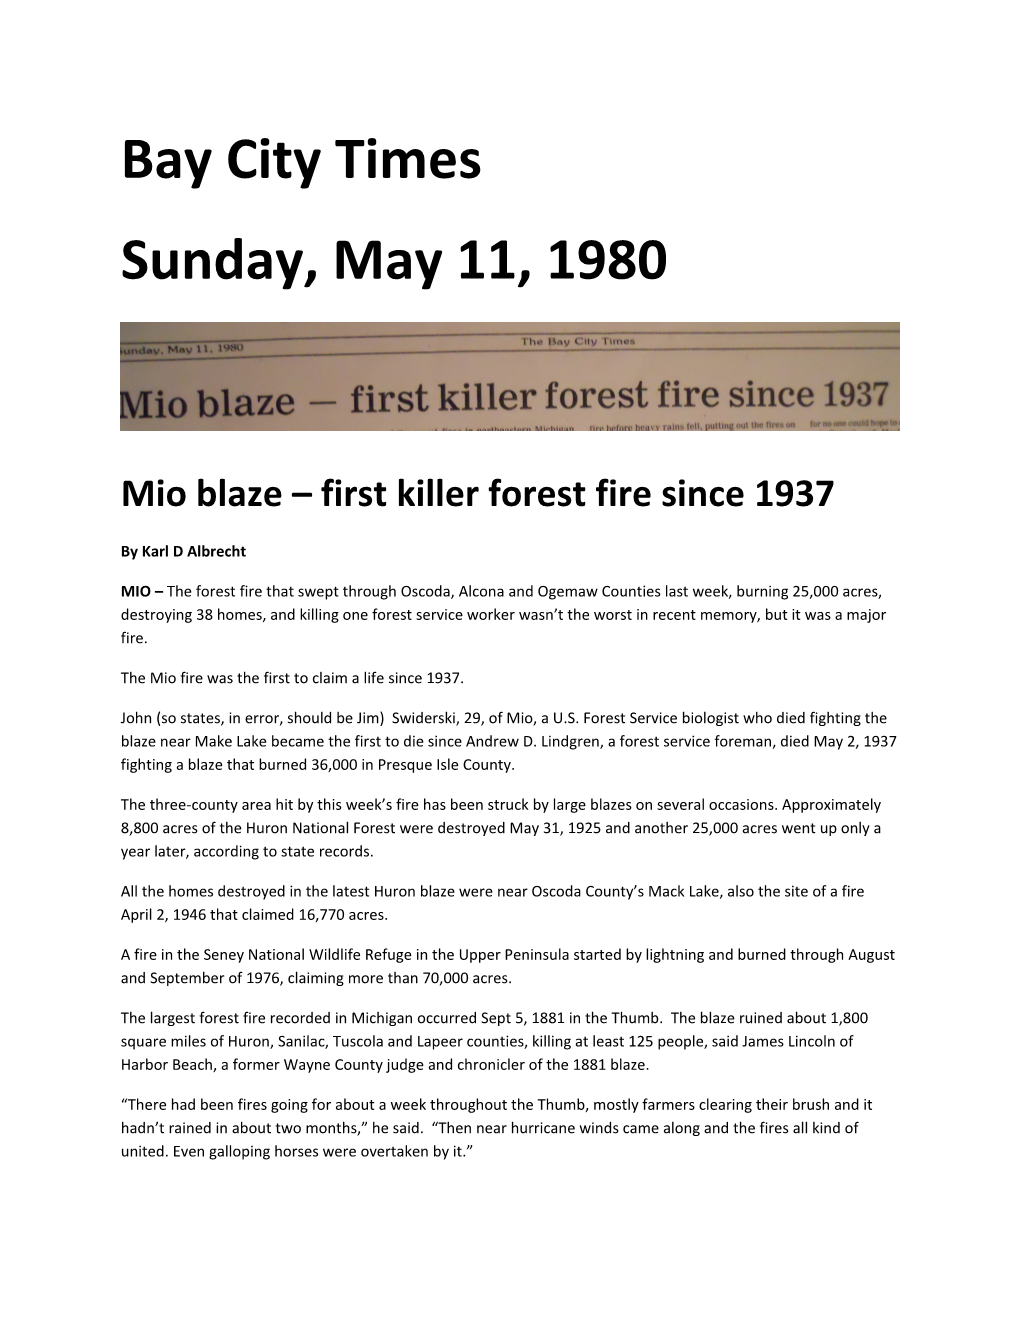 Mio Blaze First Killer Forest Fire Since 1937